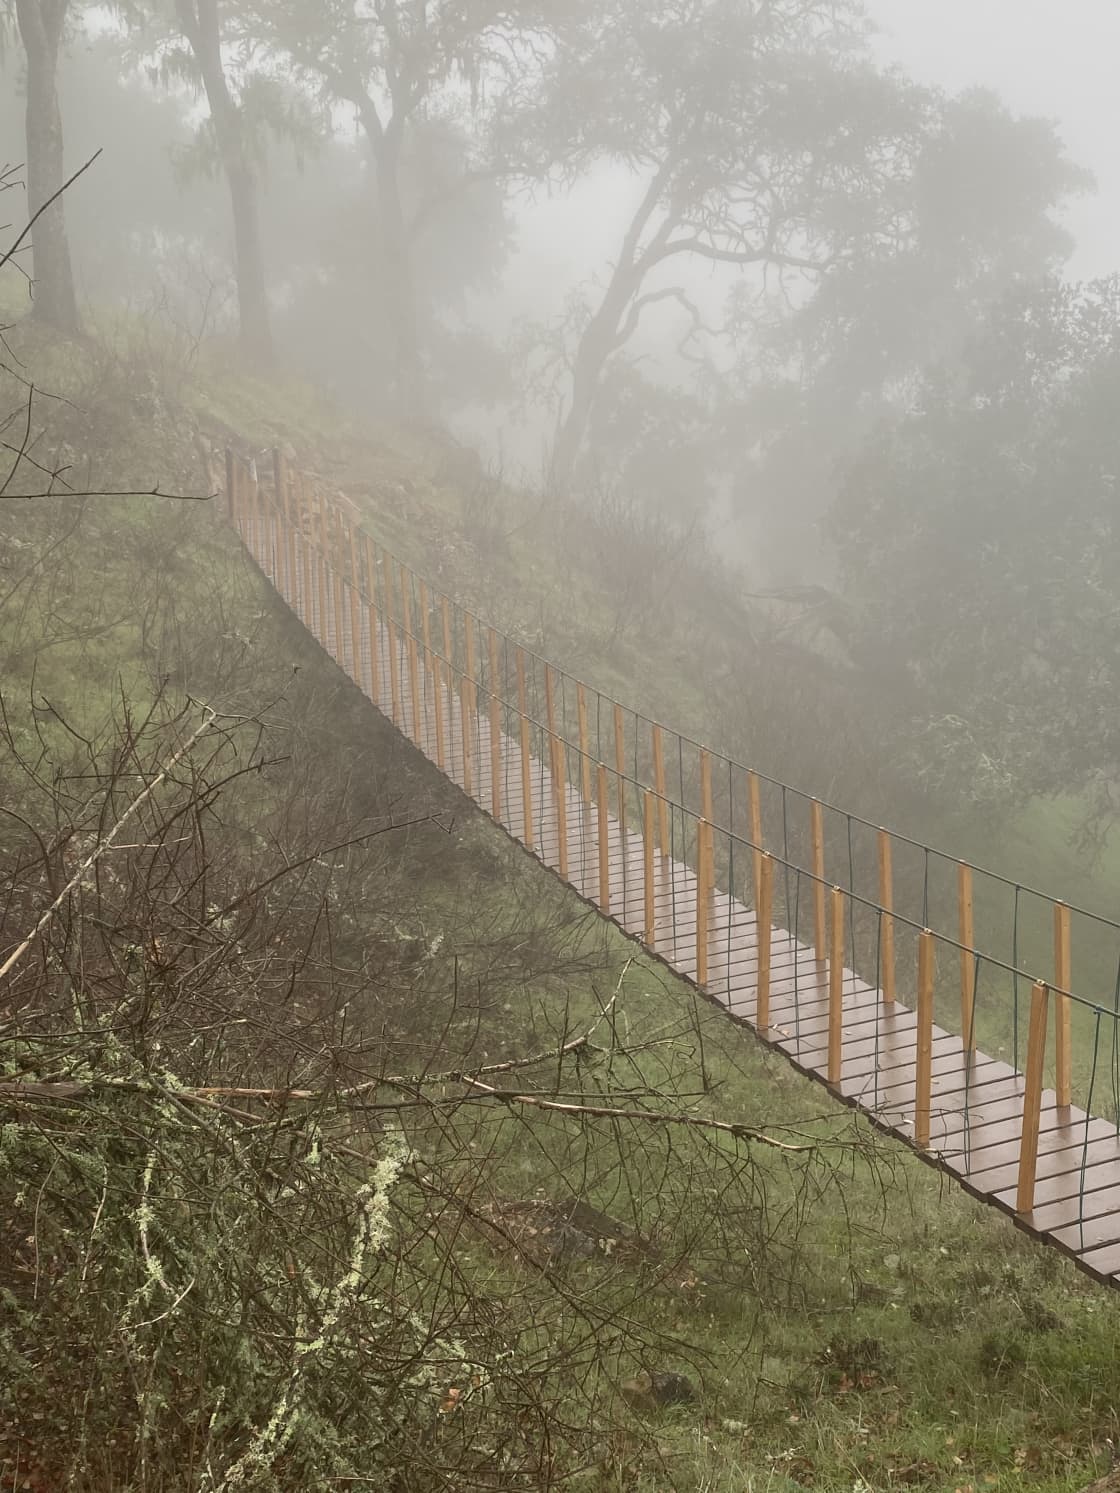 Suspension bridge on a foggy morning.